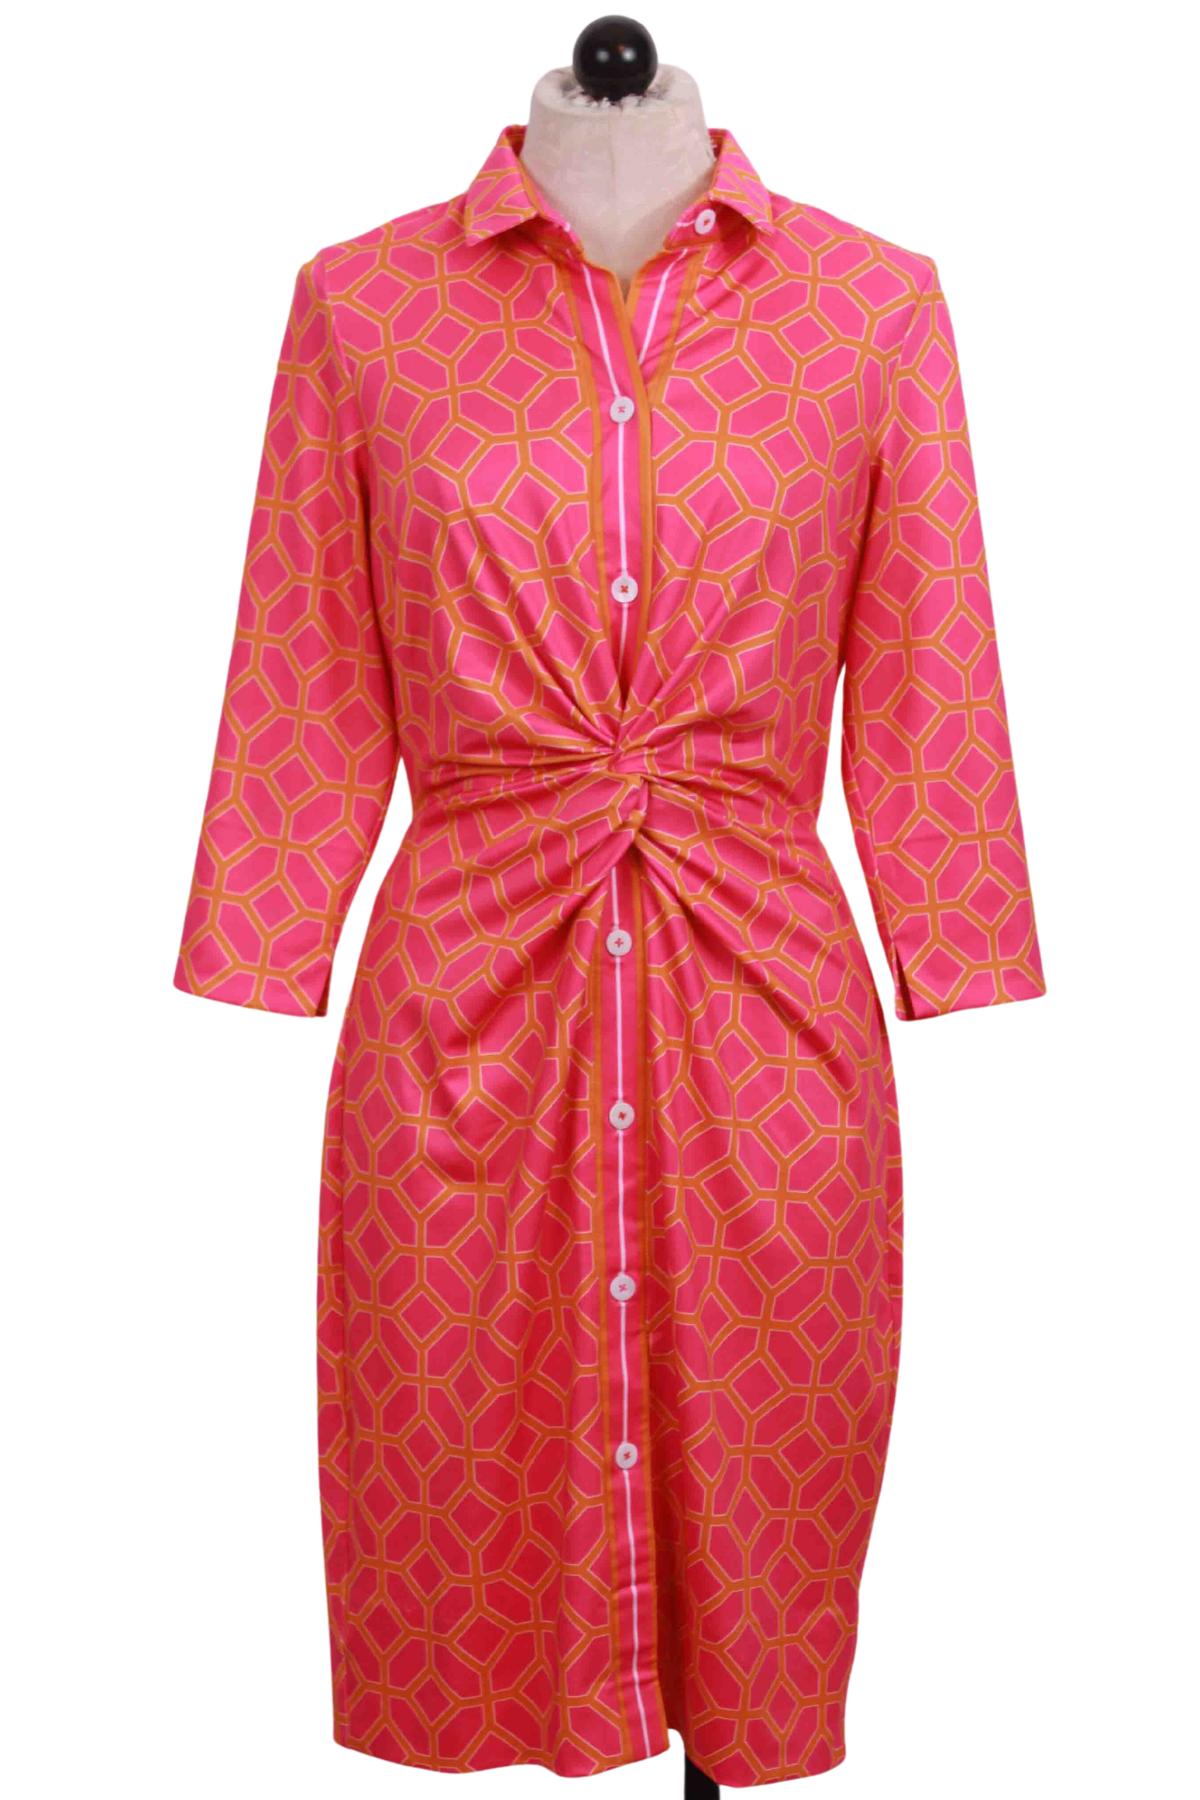 Pink and Orange Twist and Shout Lucy Dress by Gretchen Scott